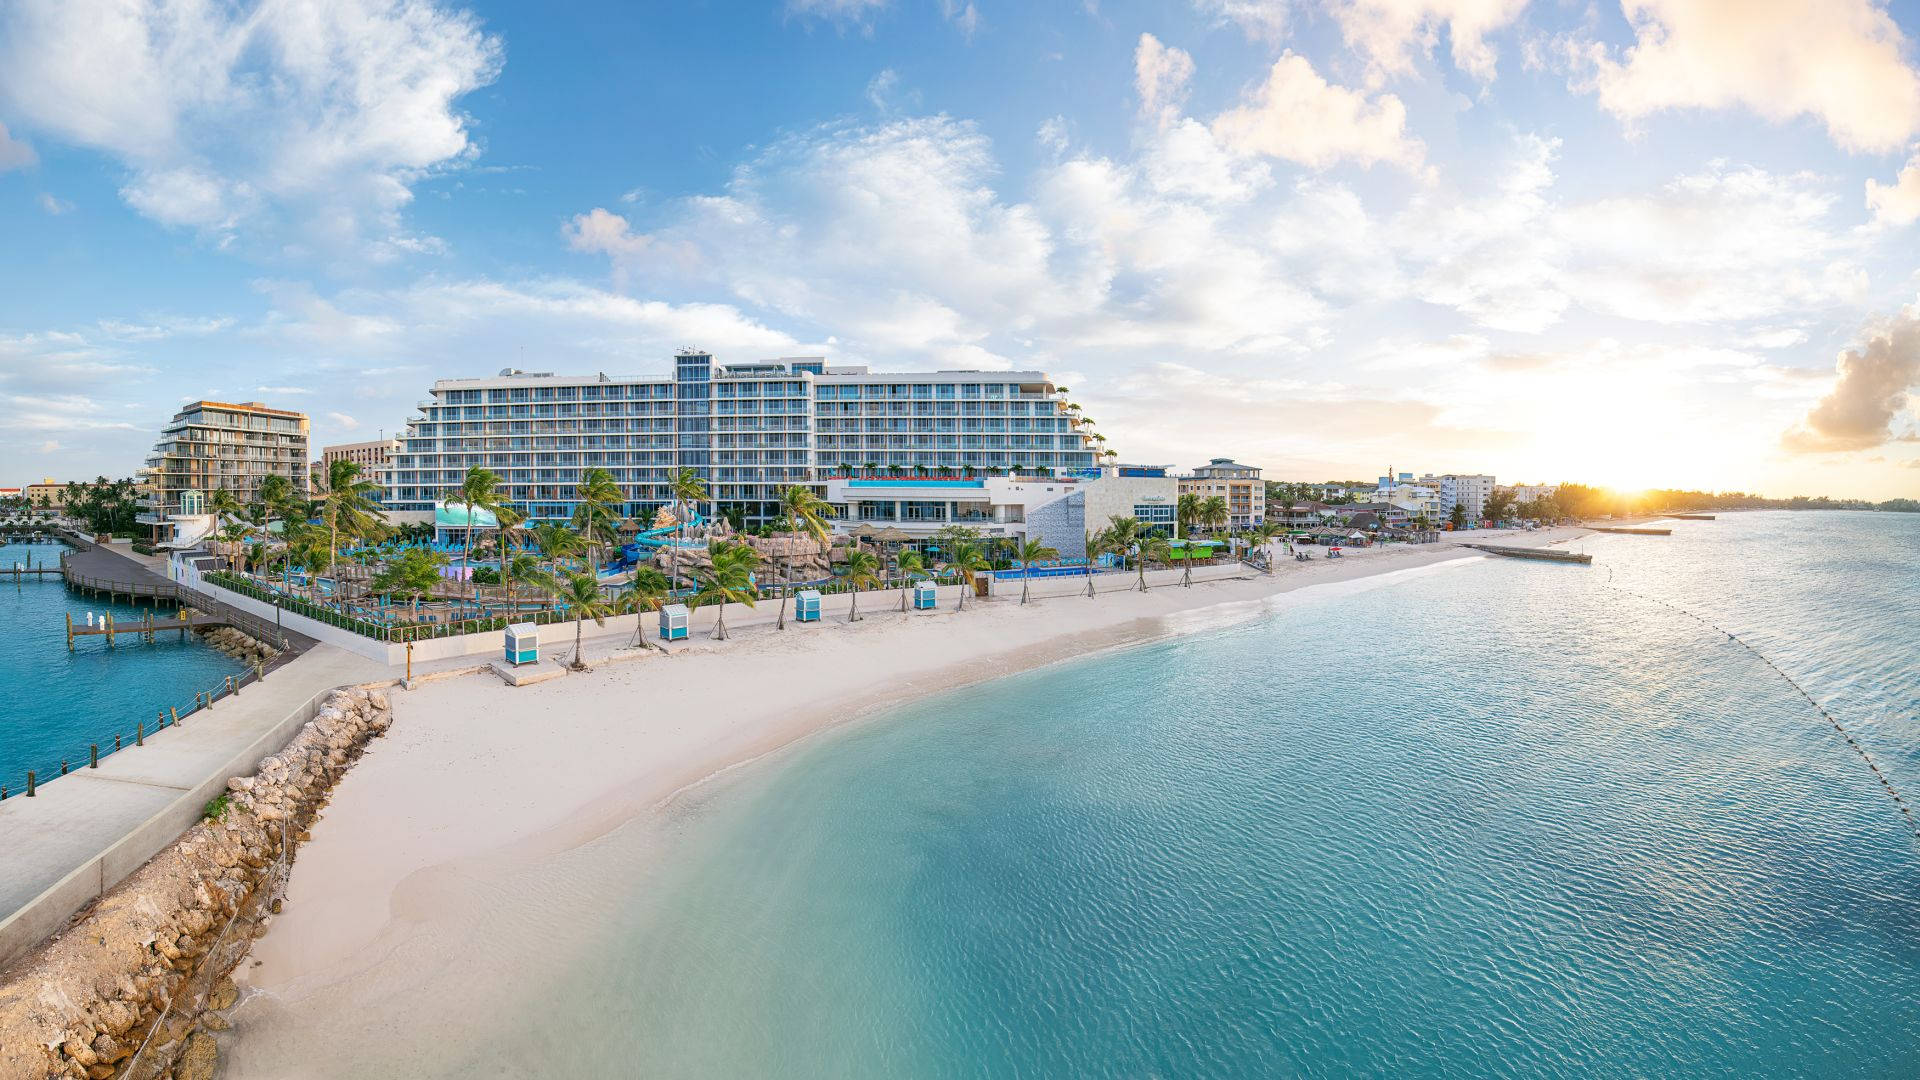 The pristine beauty of Margaritaville Beach Resort in Nassau, Bahamas. Wallpaper